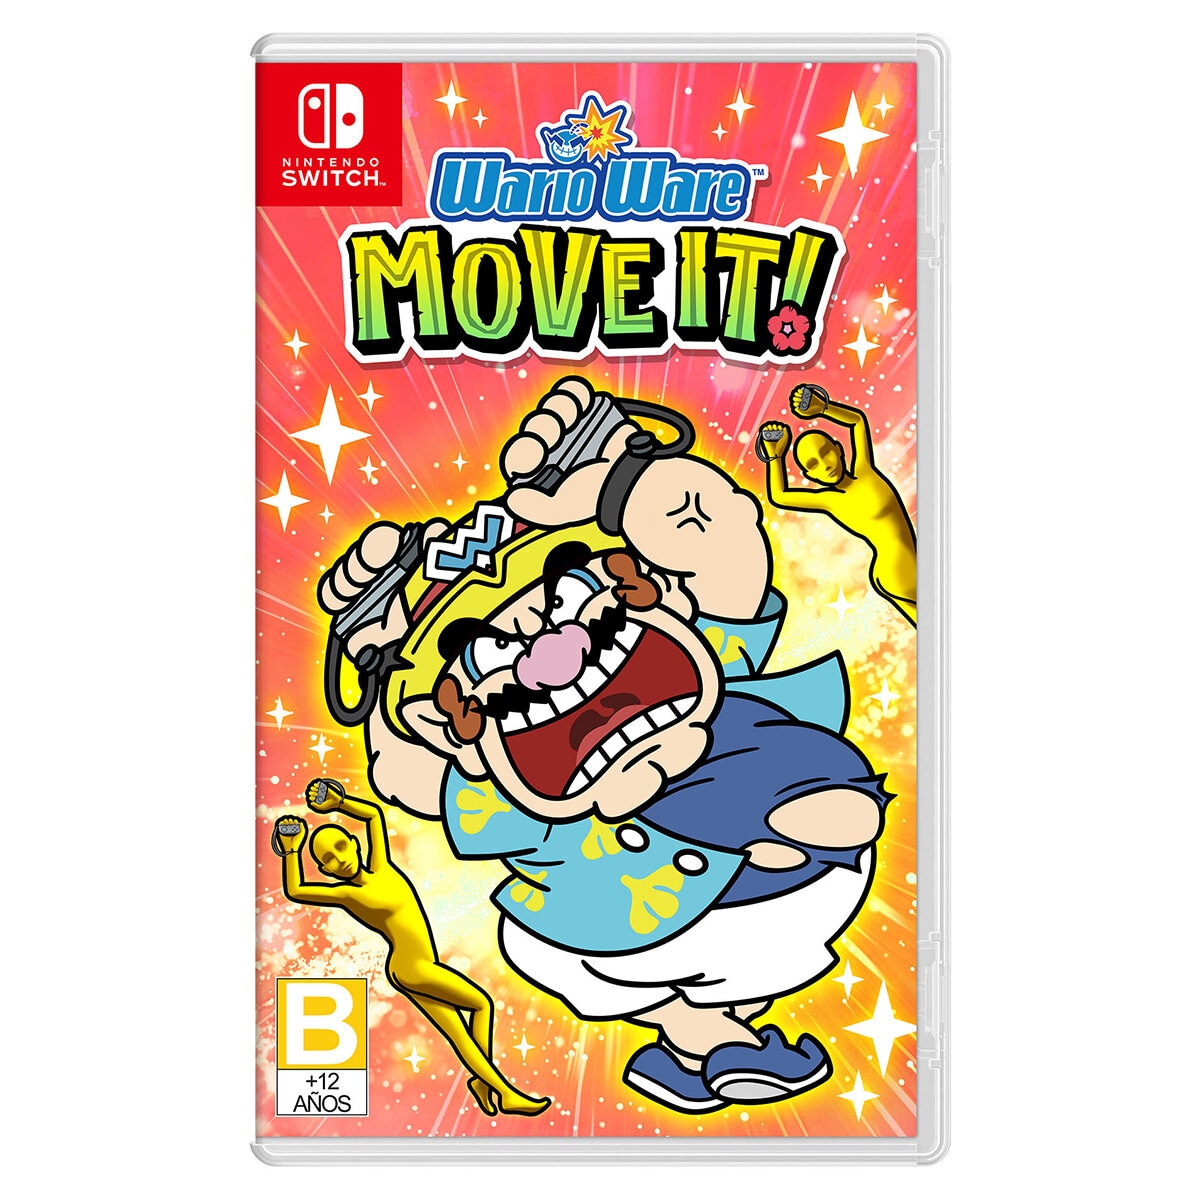 Nintendo Switch - WarioWare Move It